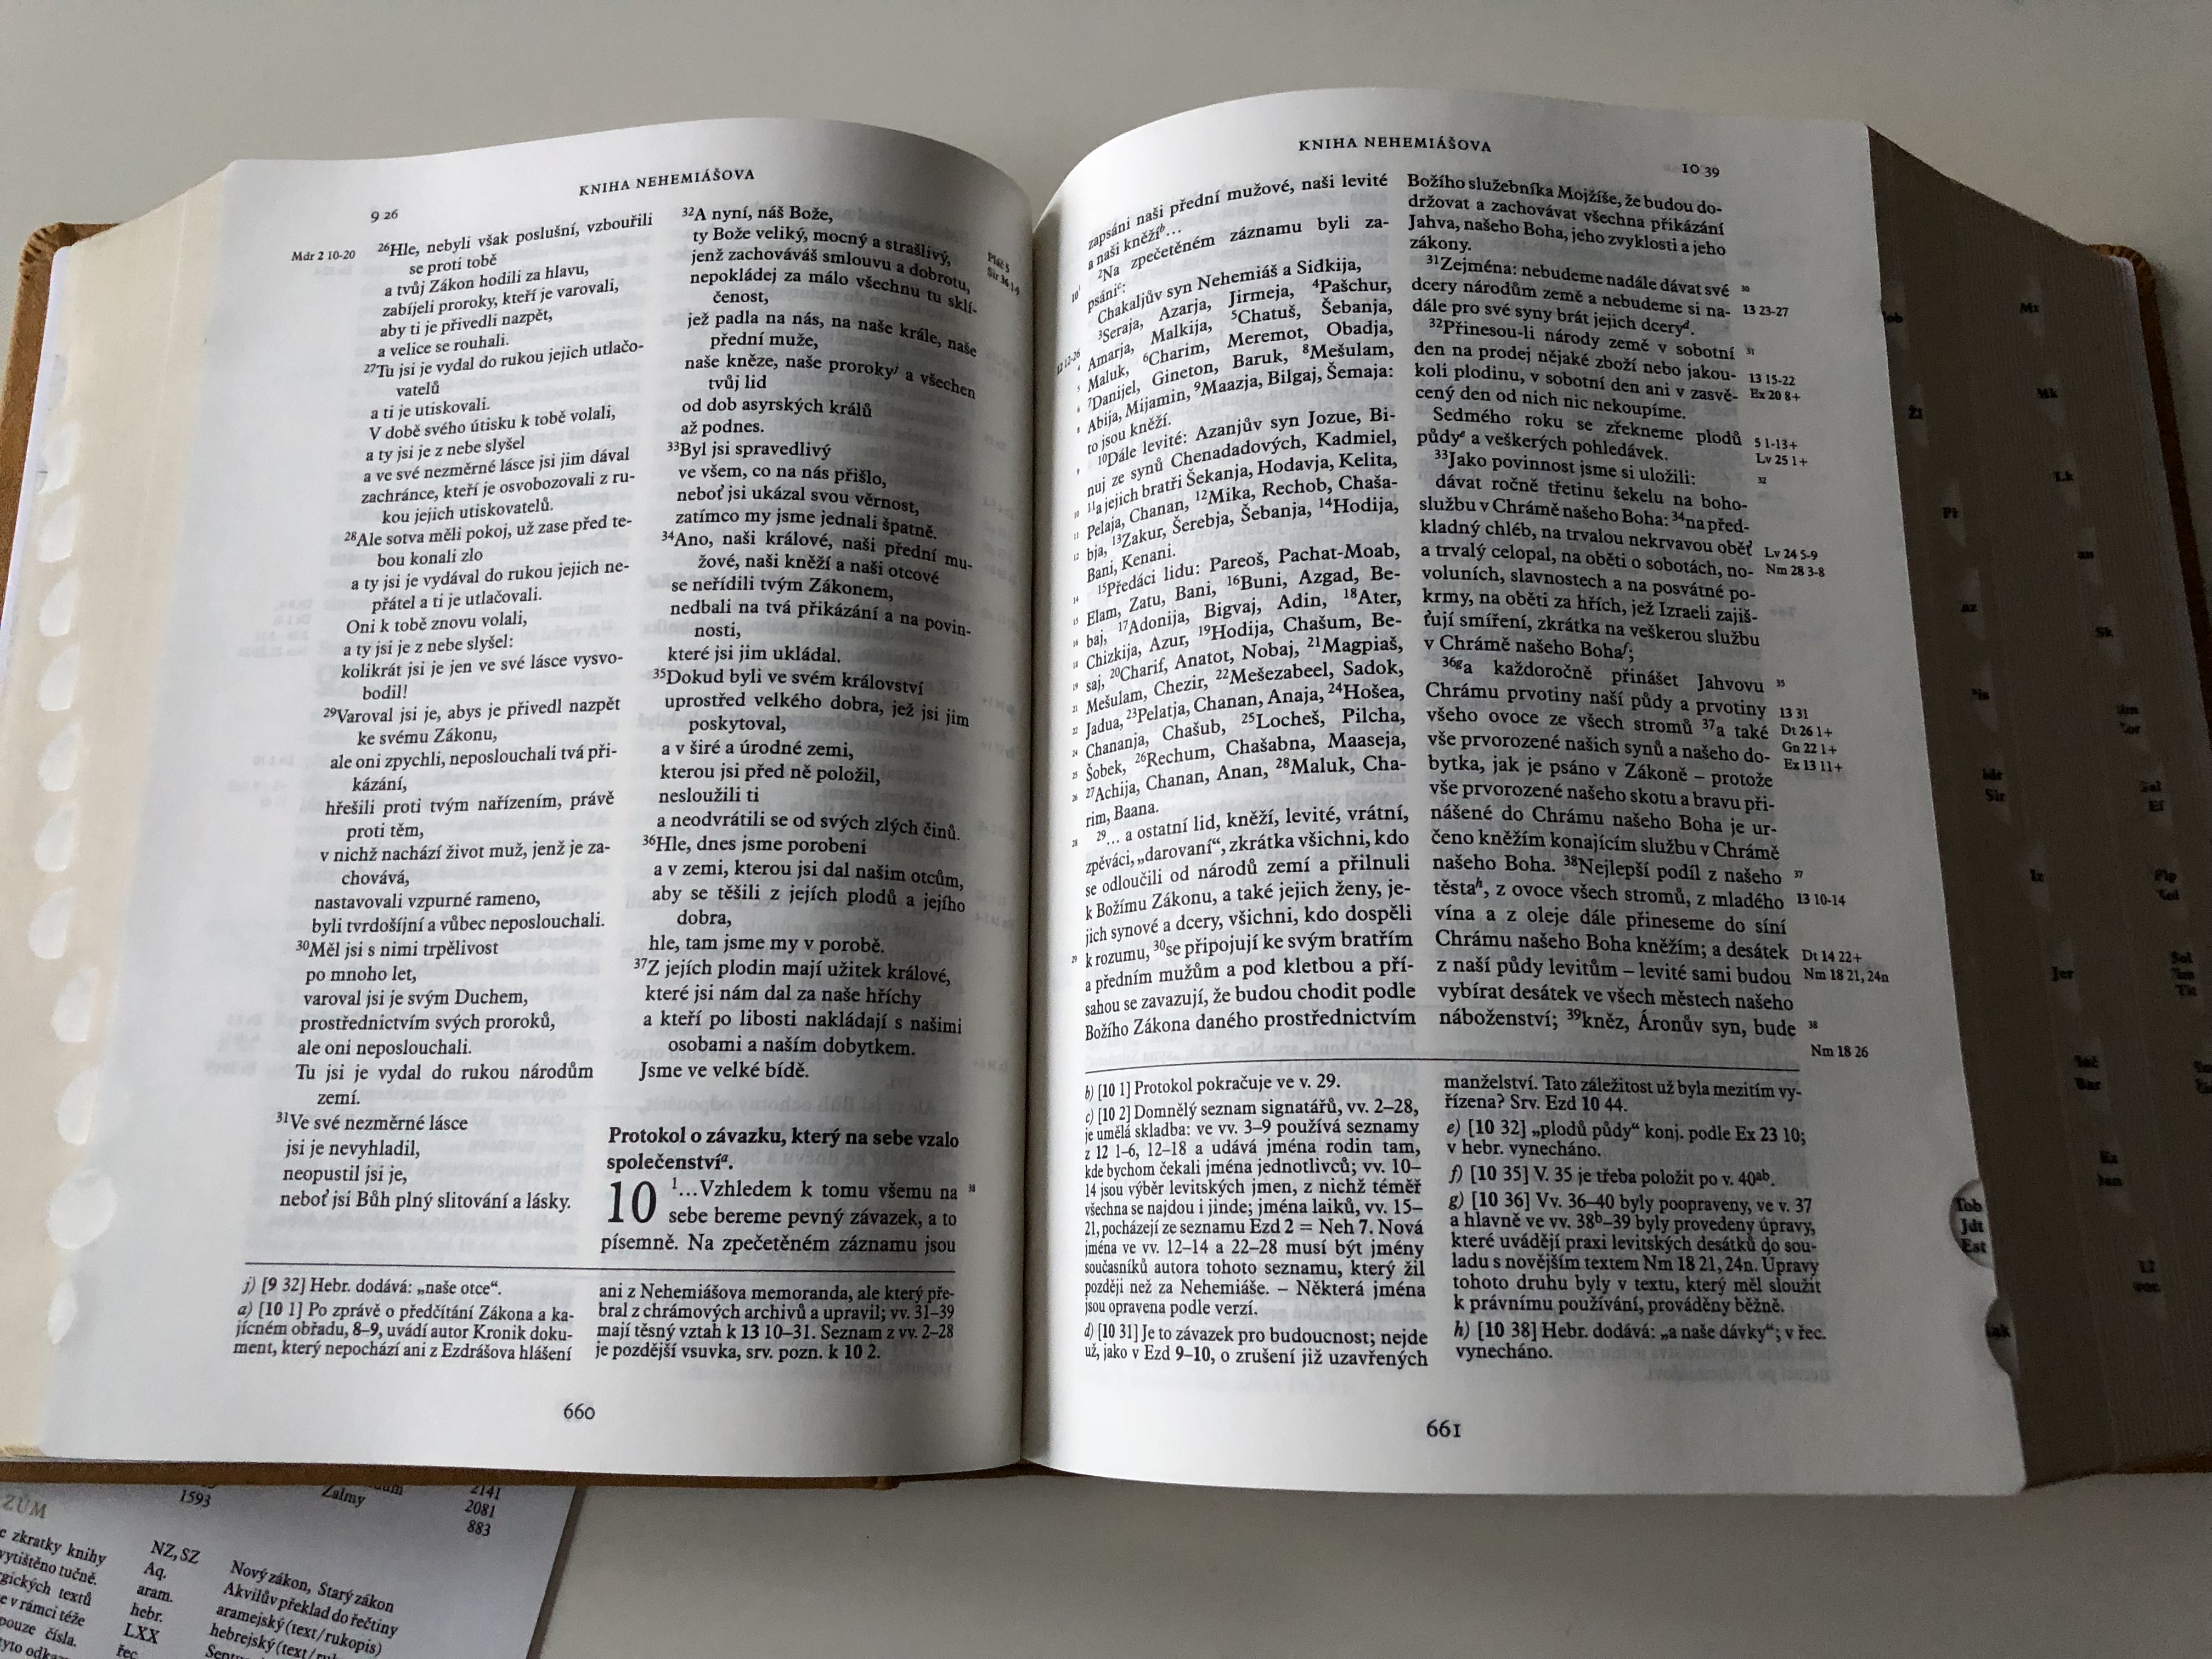 the-jerusalem-bible-in-czech-language-jeruzal-msk-bible-p-smo-svat-vydan-jeruzal-mskou-biblickou-kolou-leather-bound-with-golden-edges-thumb-index-contains-deuterocanonical-books-8-.jpg